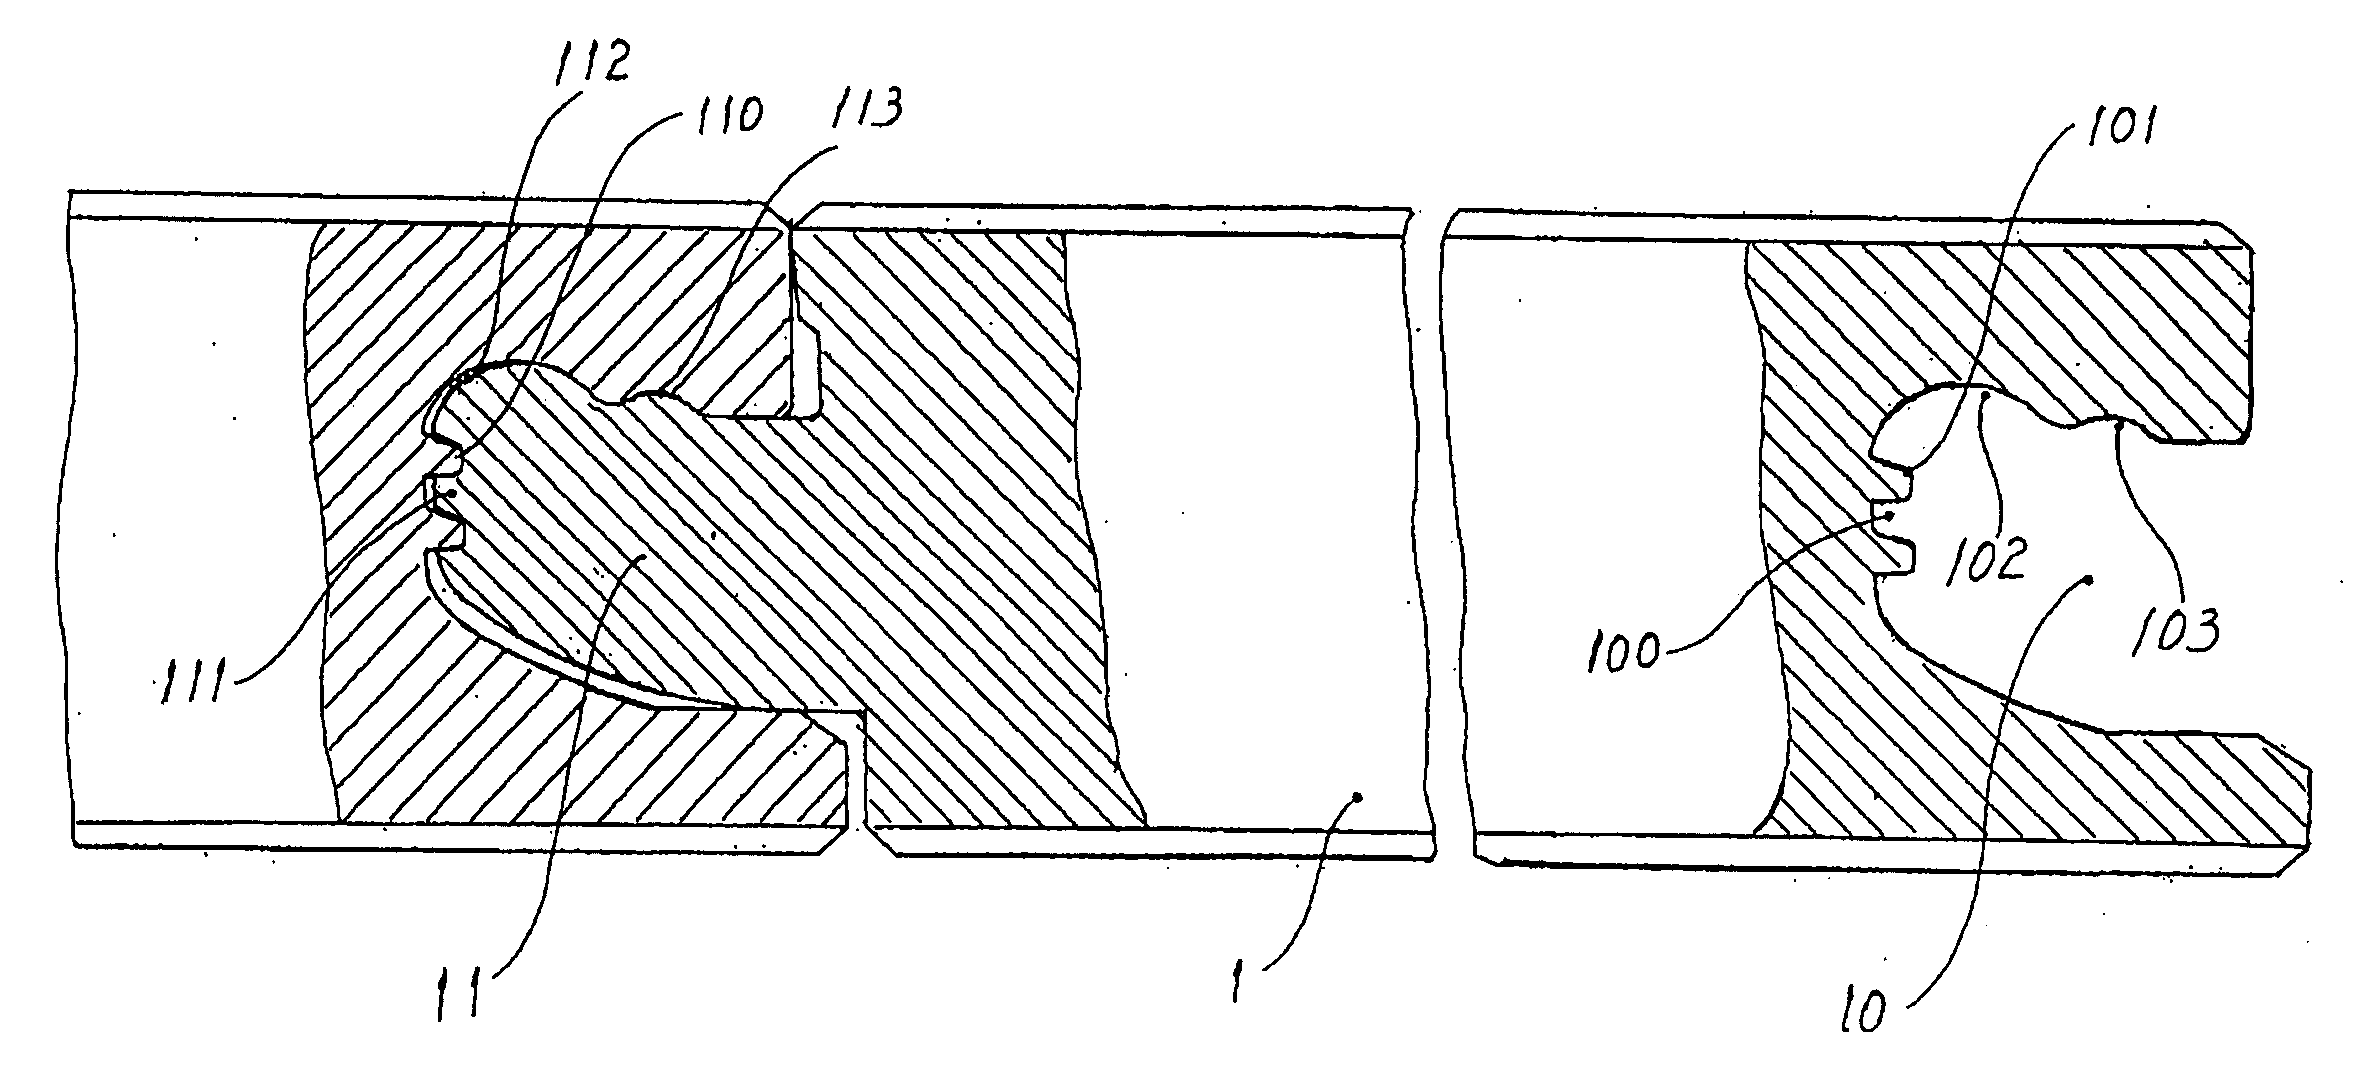 Interlocking structure for floor panel